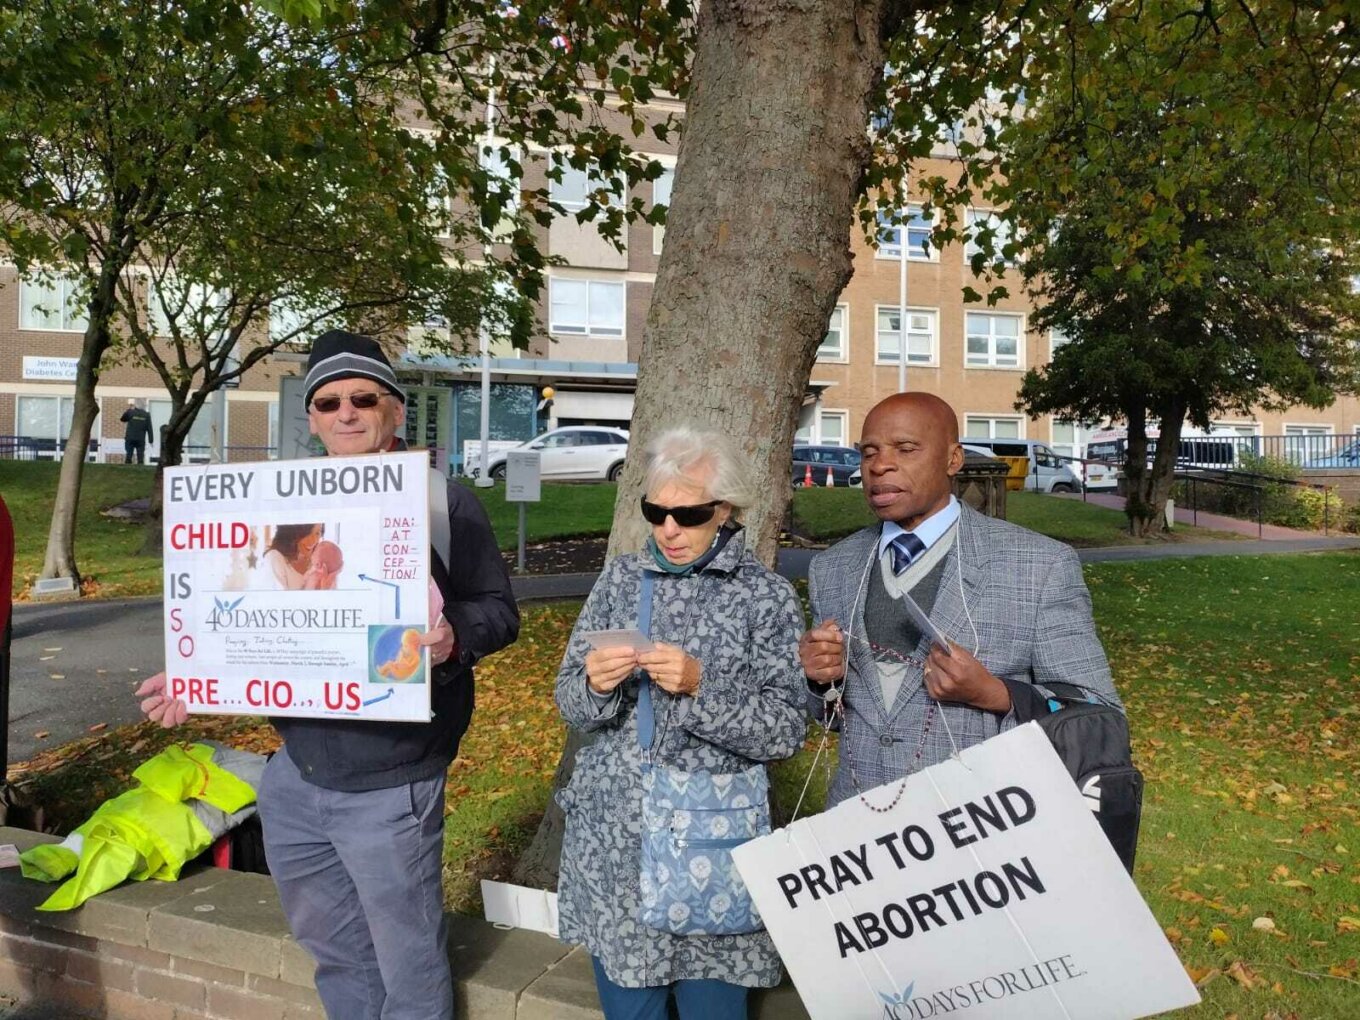 Anti abortion protestors outside the Hallamshire Hospital